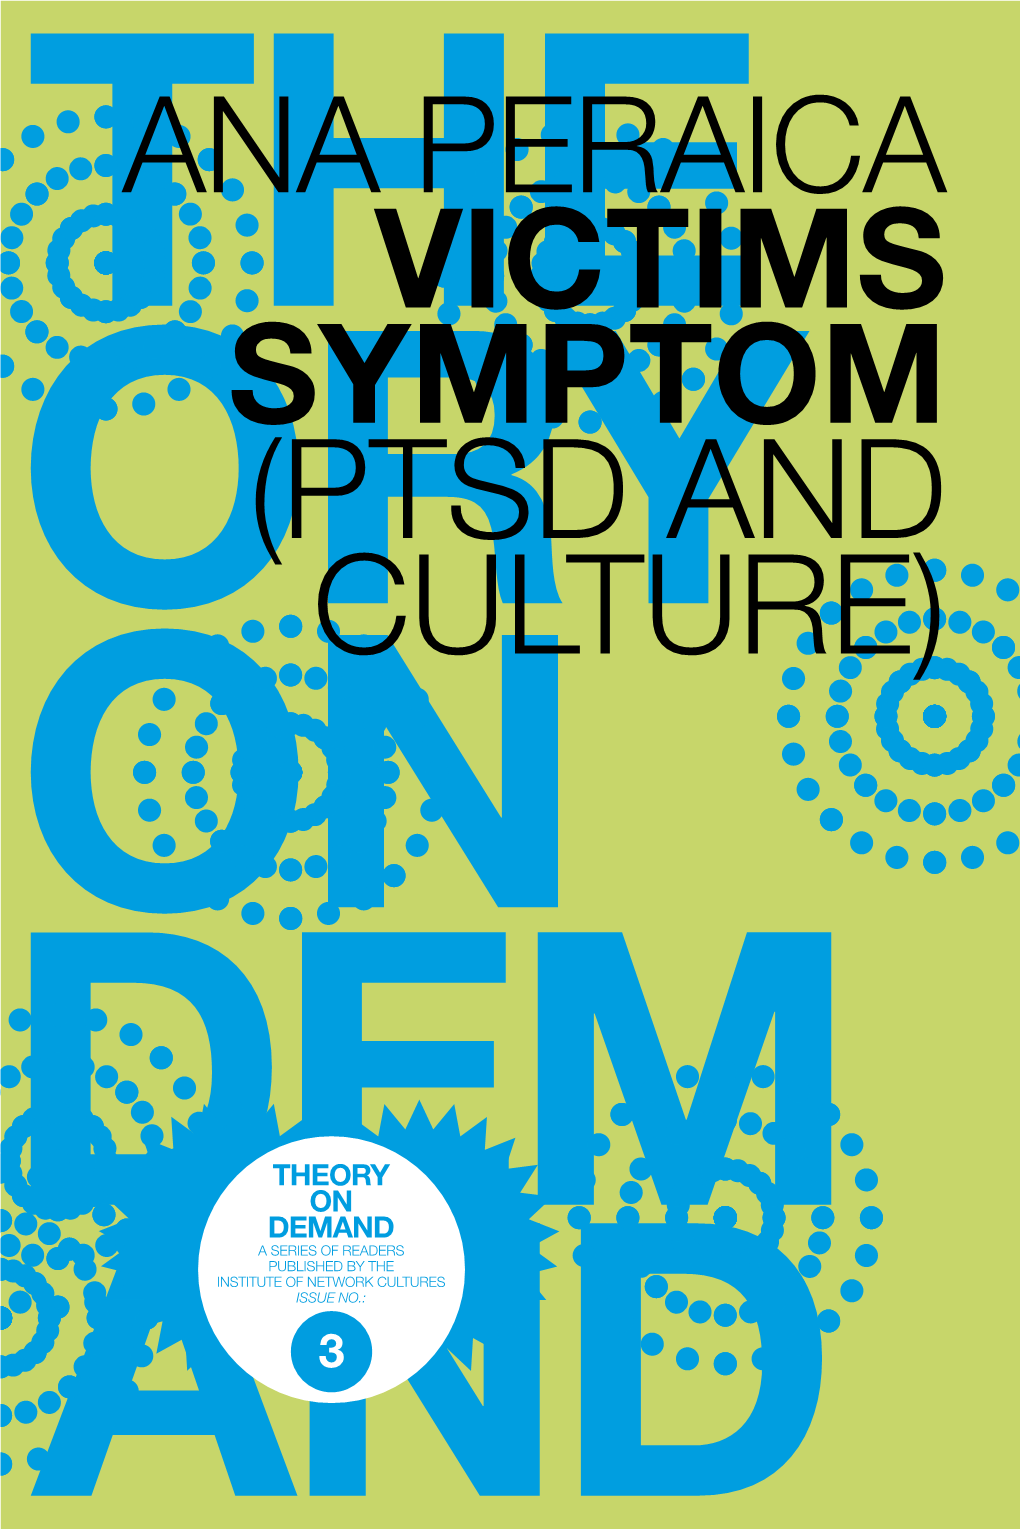 Victims Symptom (Ptsd and Culture)